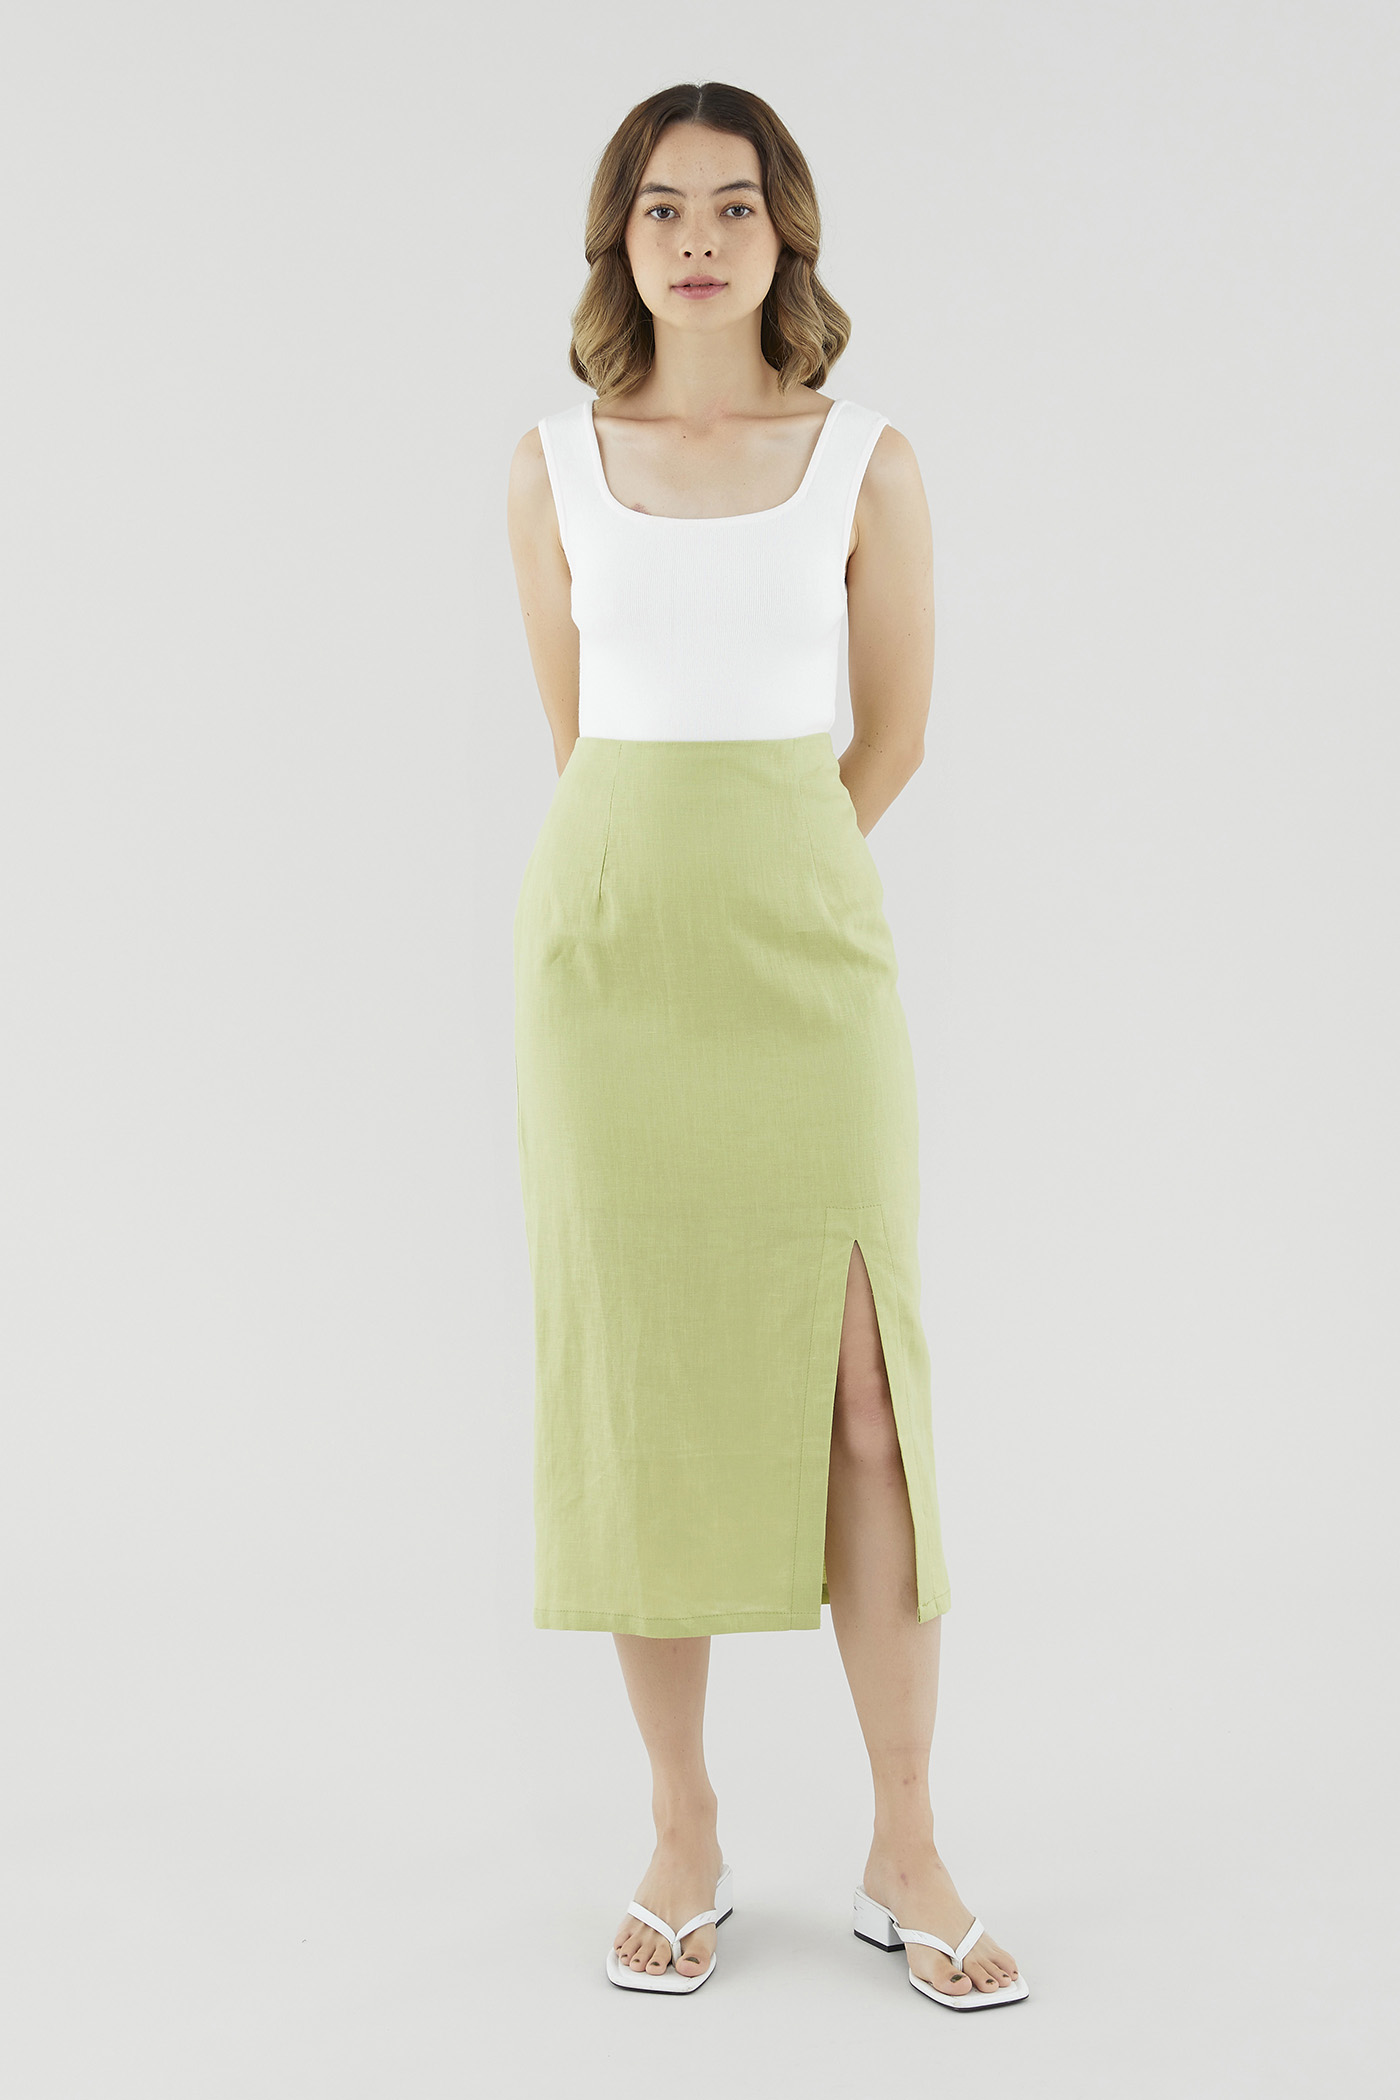 Elisia Linen Slip Skirt